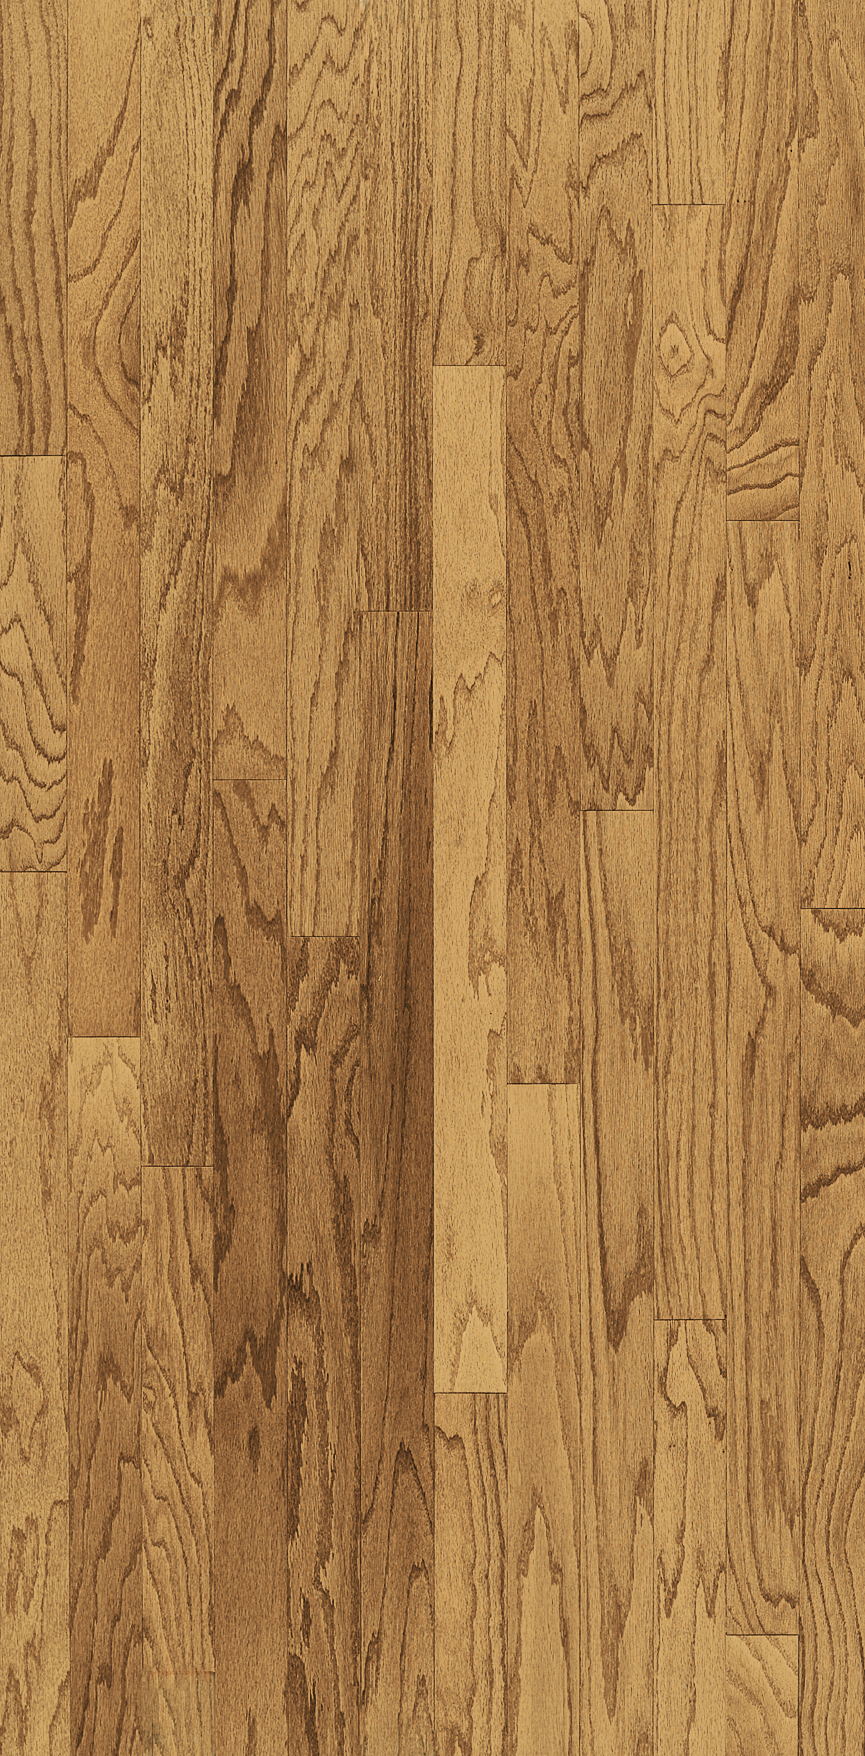 Harvest 5" - Turlington Collection - Engineered Hardwood Flooring by Bruce